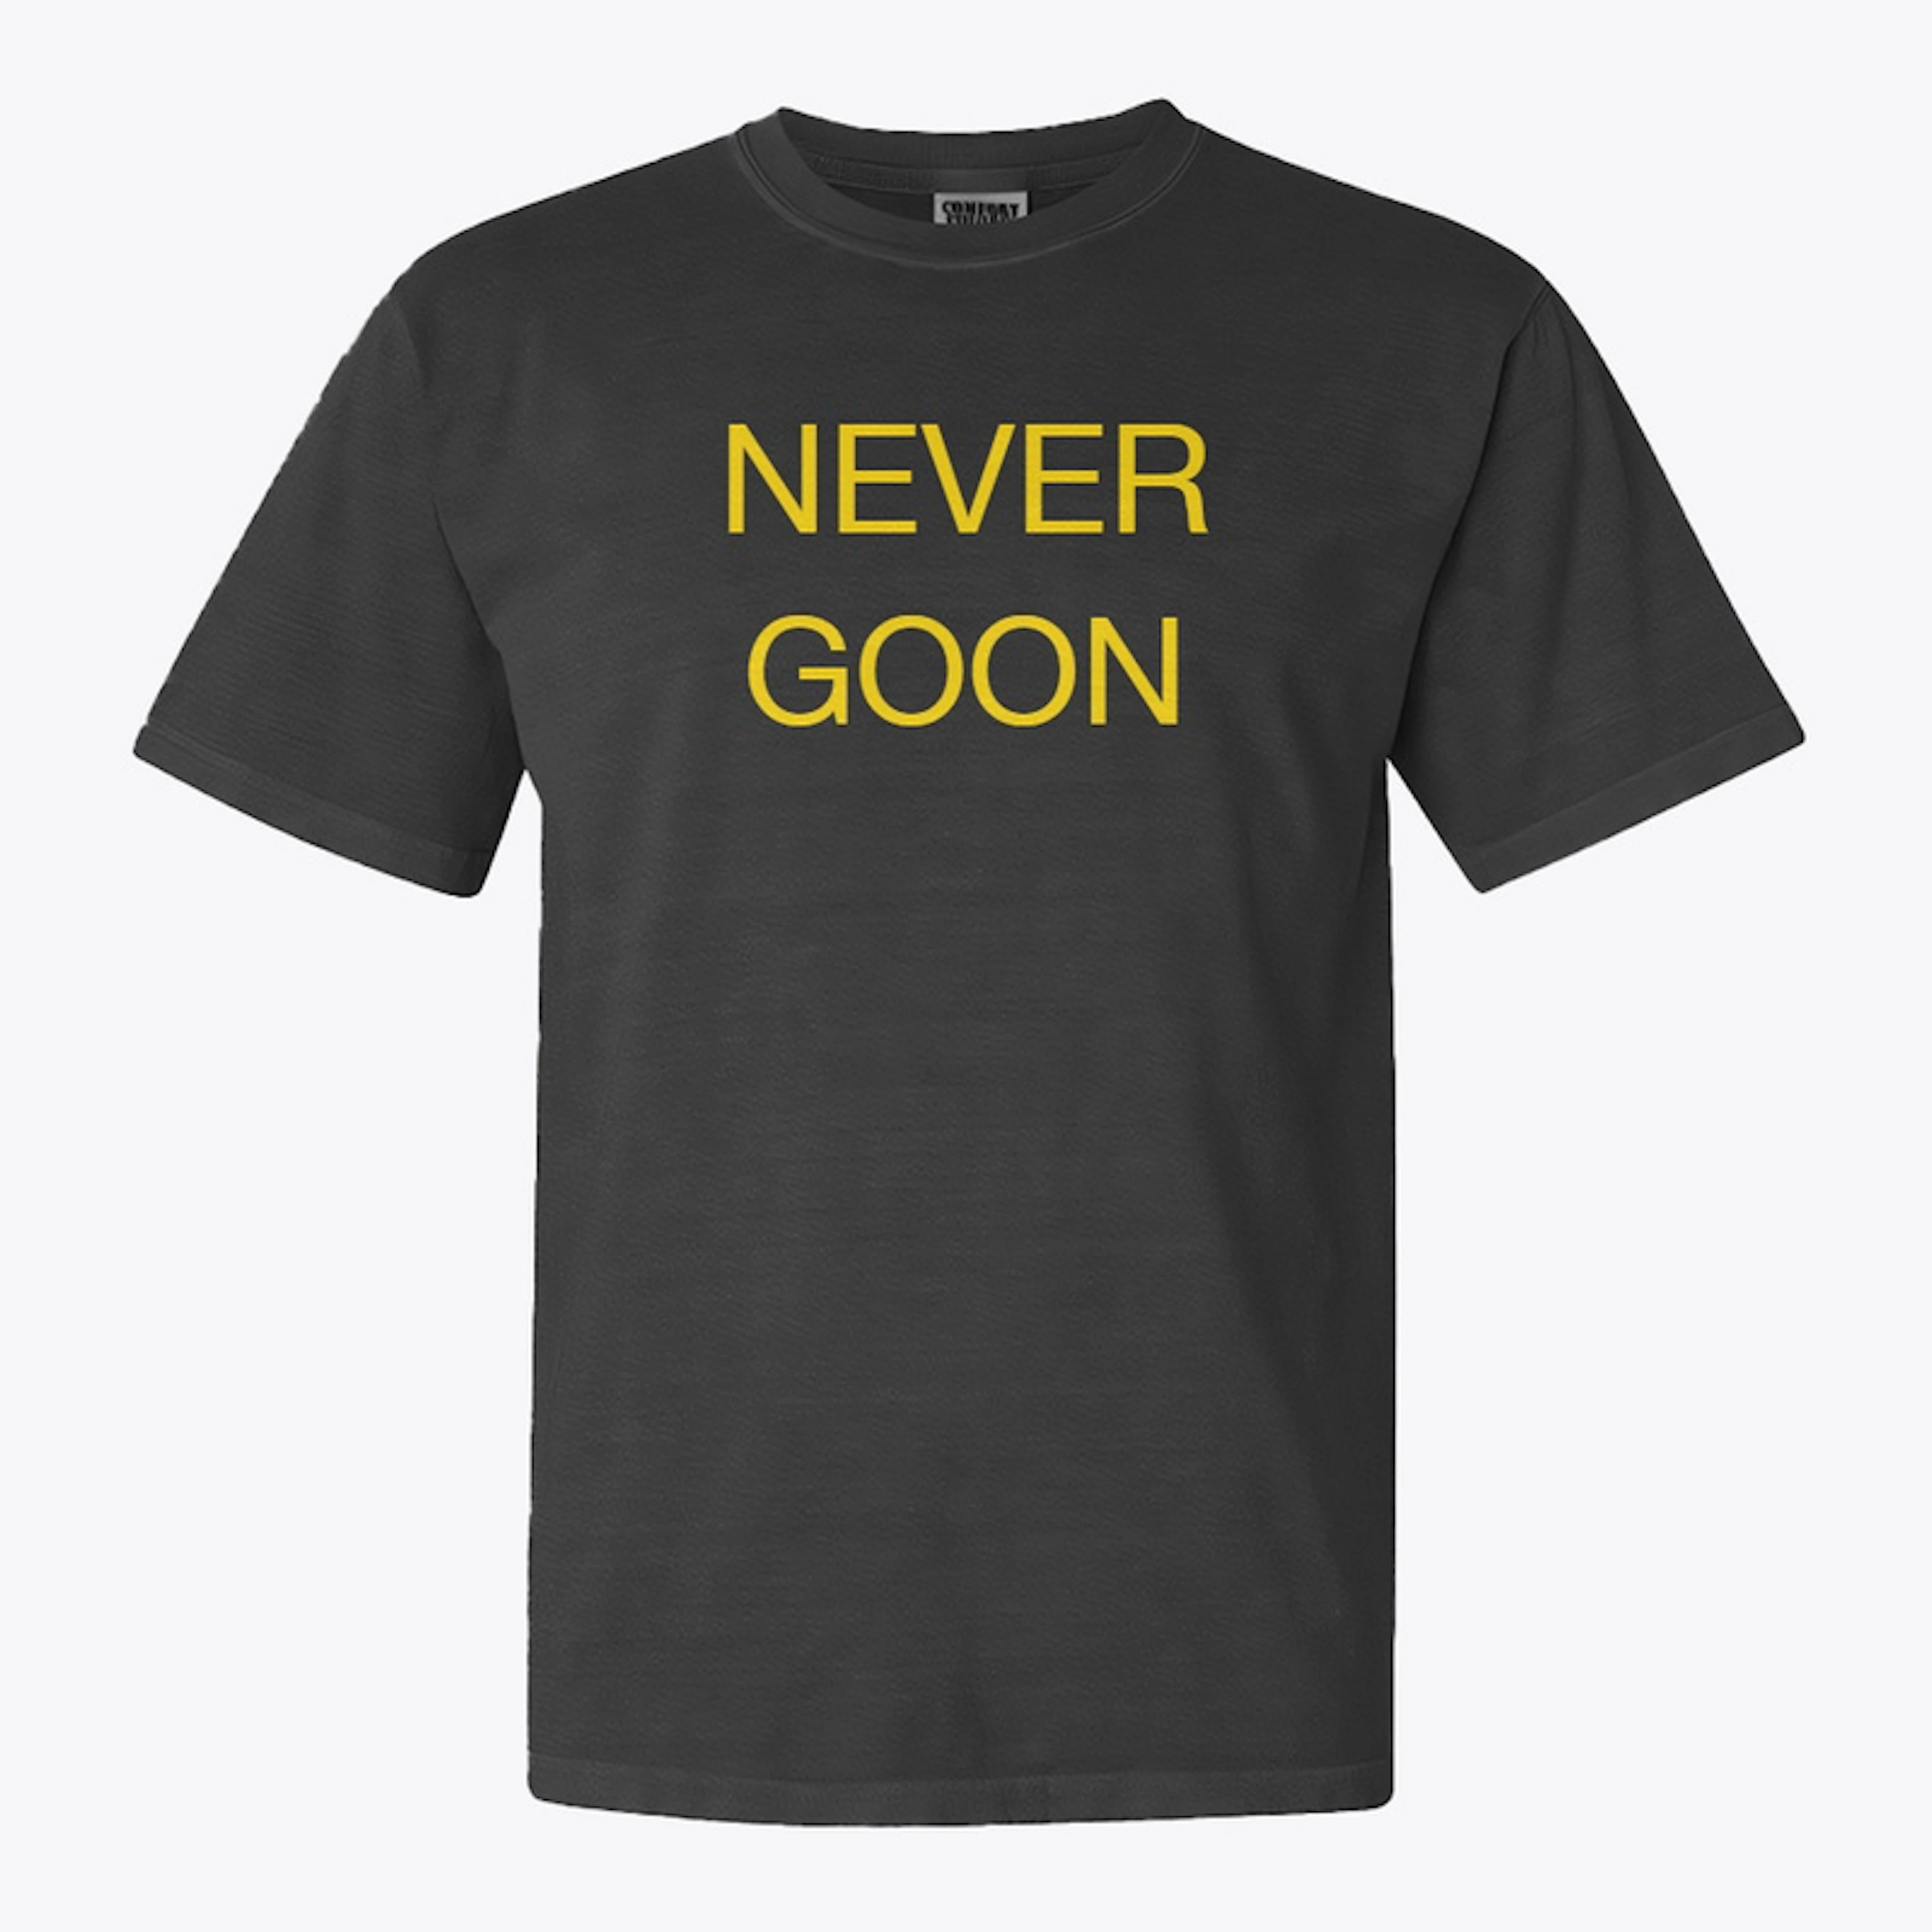 Never Goon (gold)